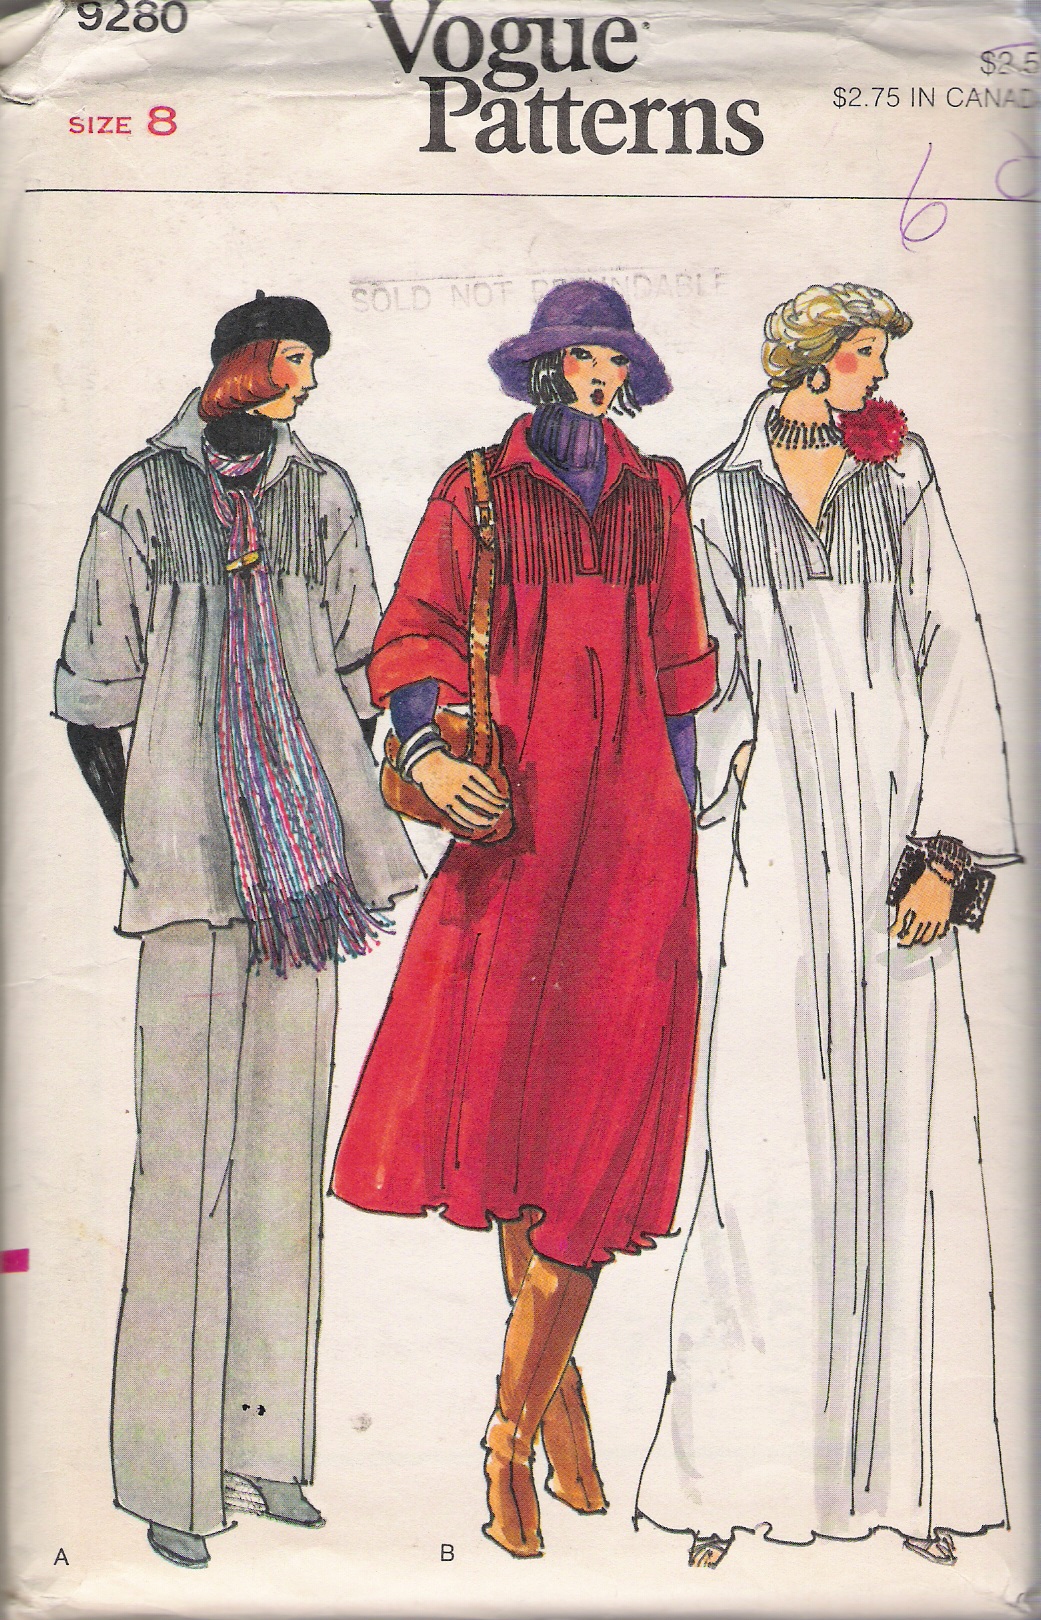 Vogue 9280 - Vintage Sewing Patterns